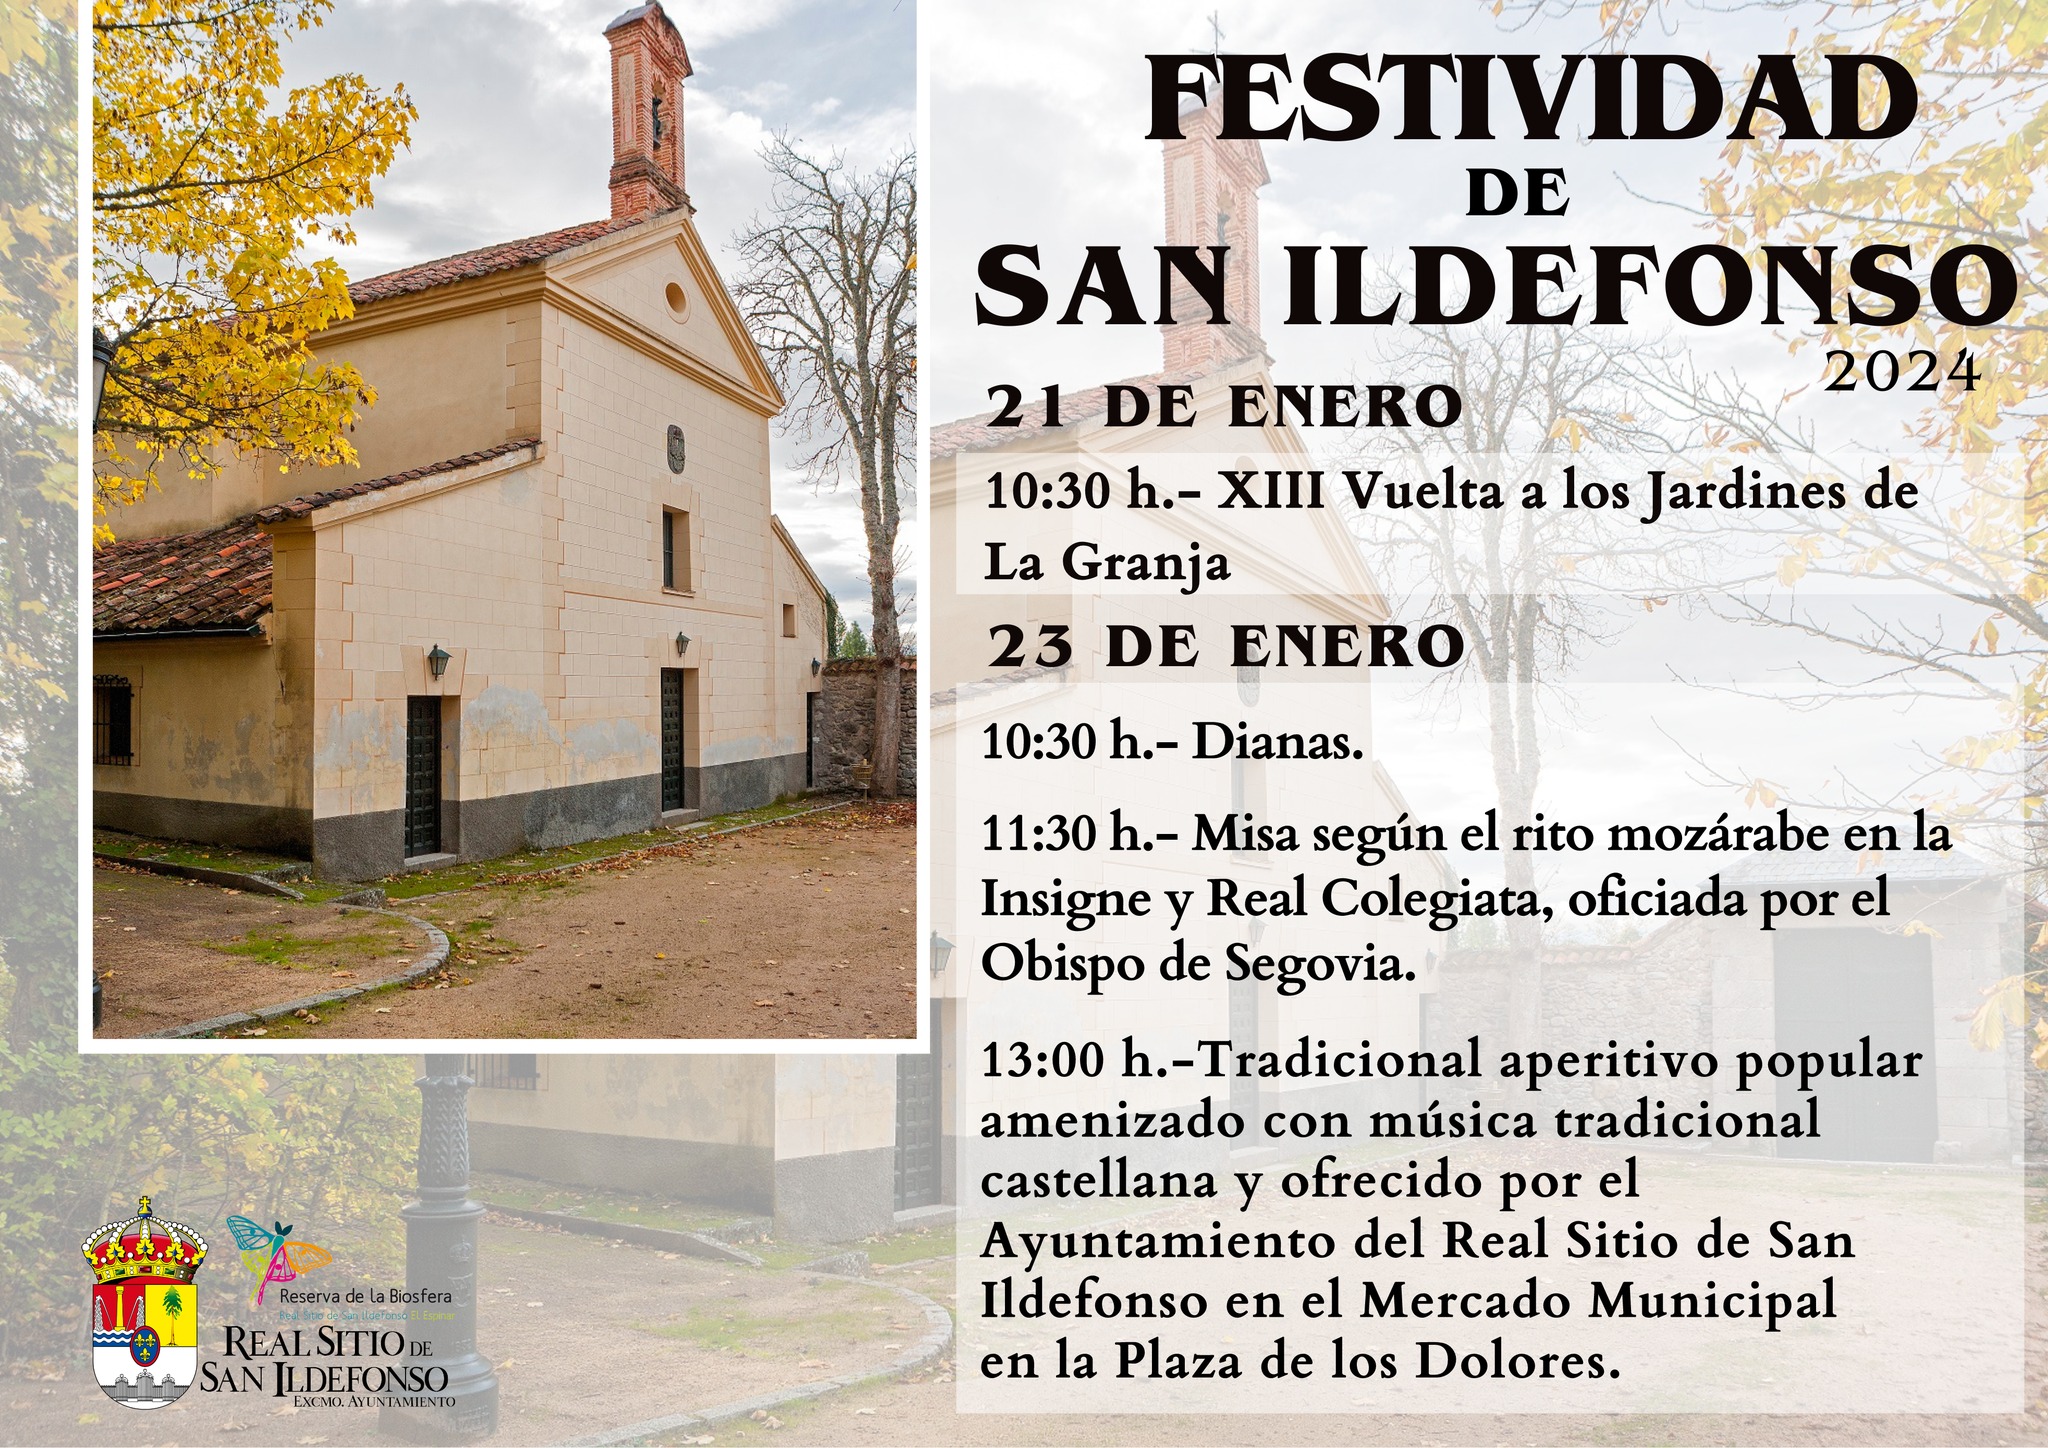 Festividad de San Ildefonso